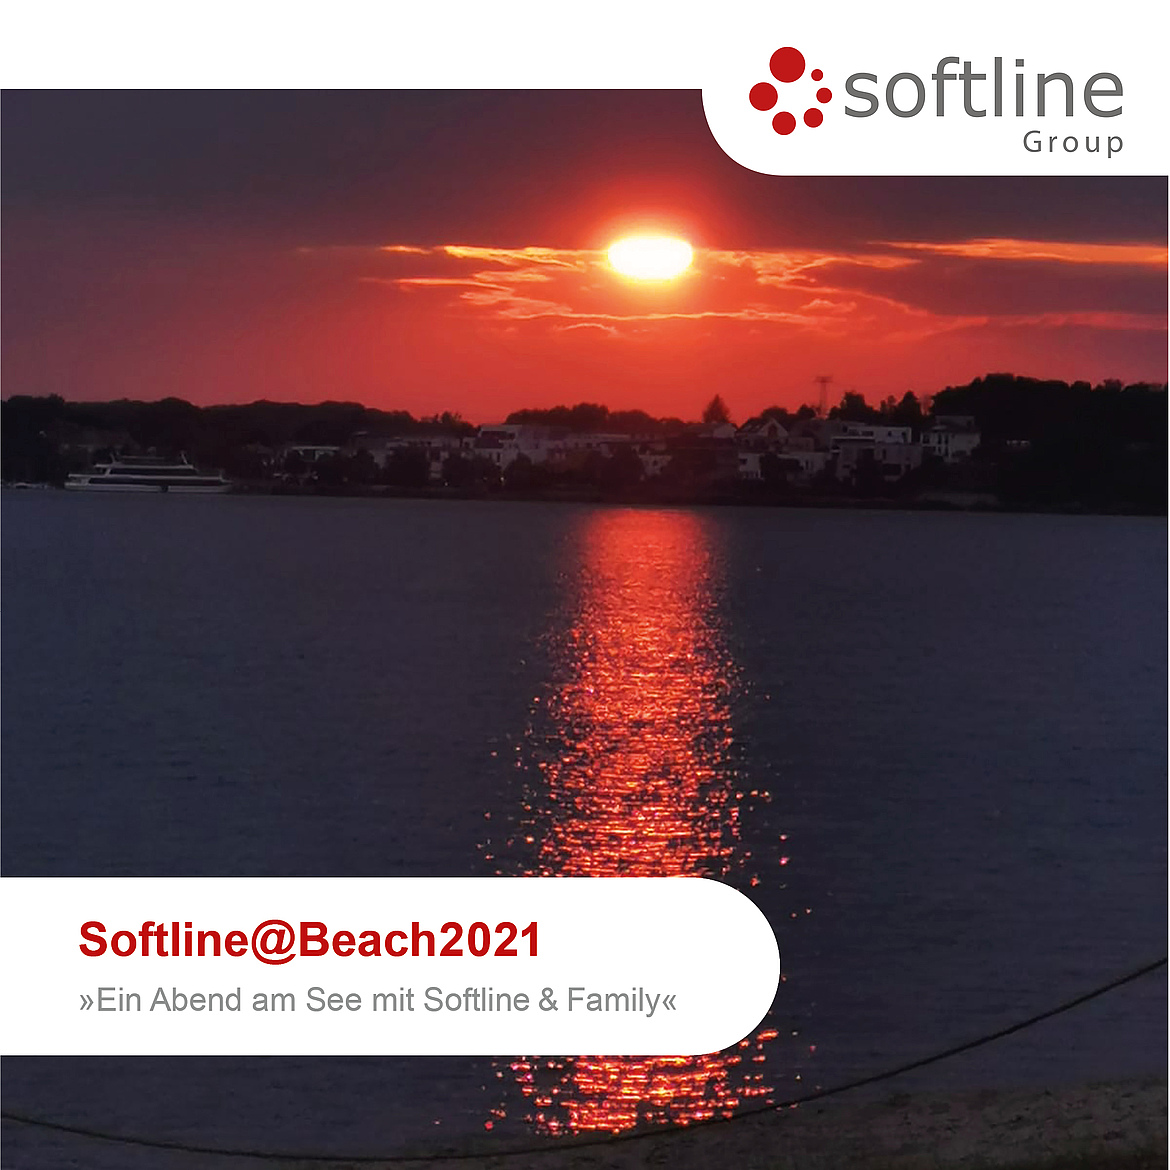 Softline@Beach2021